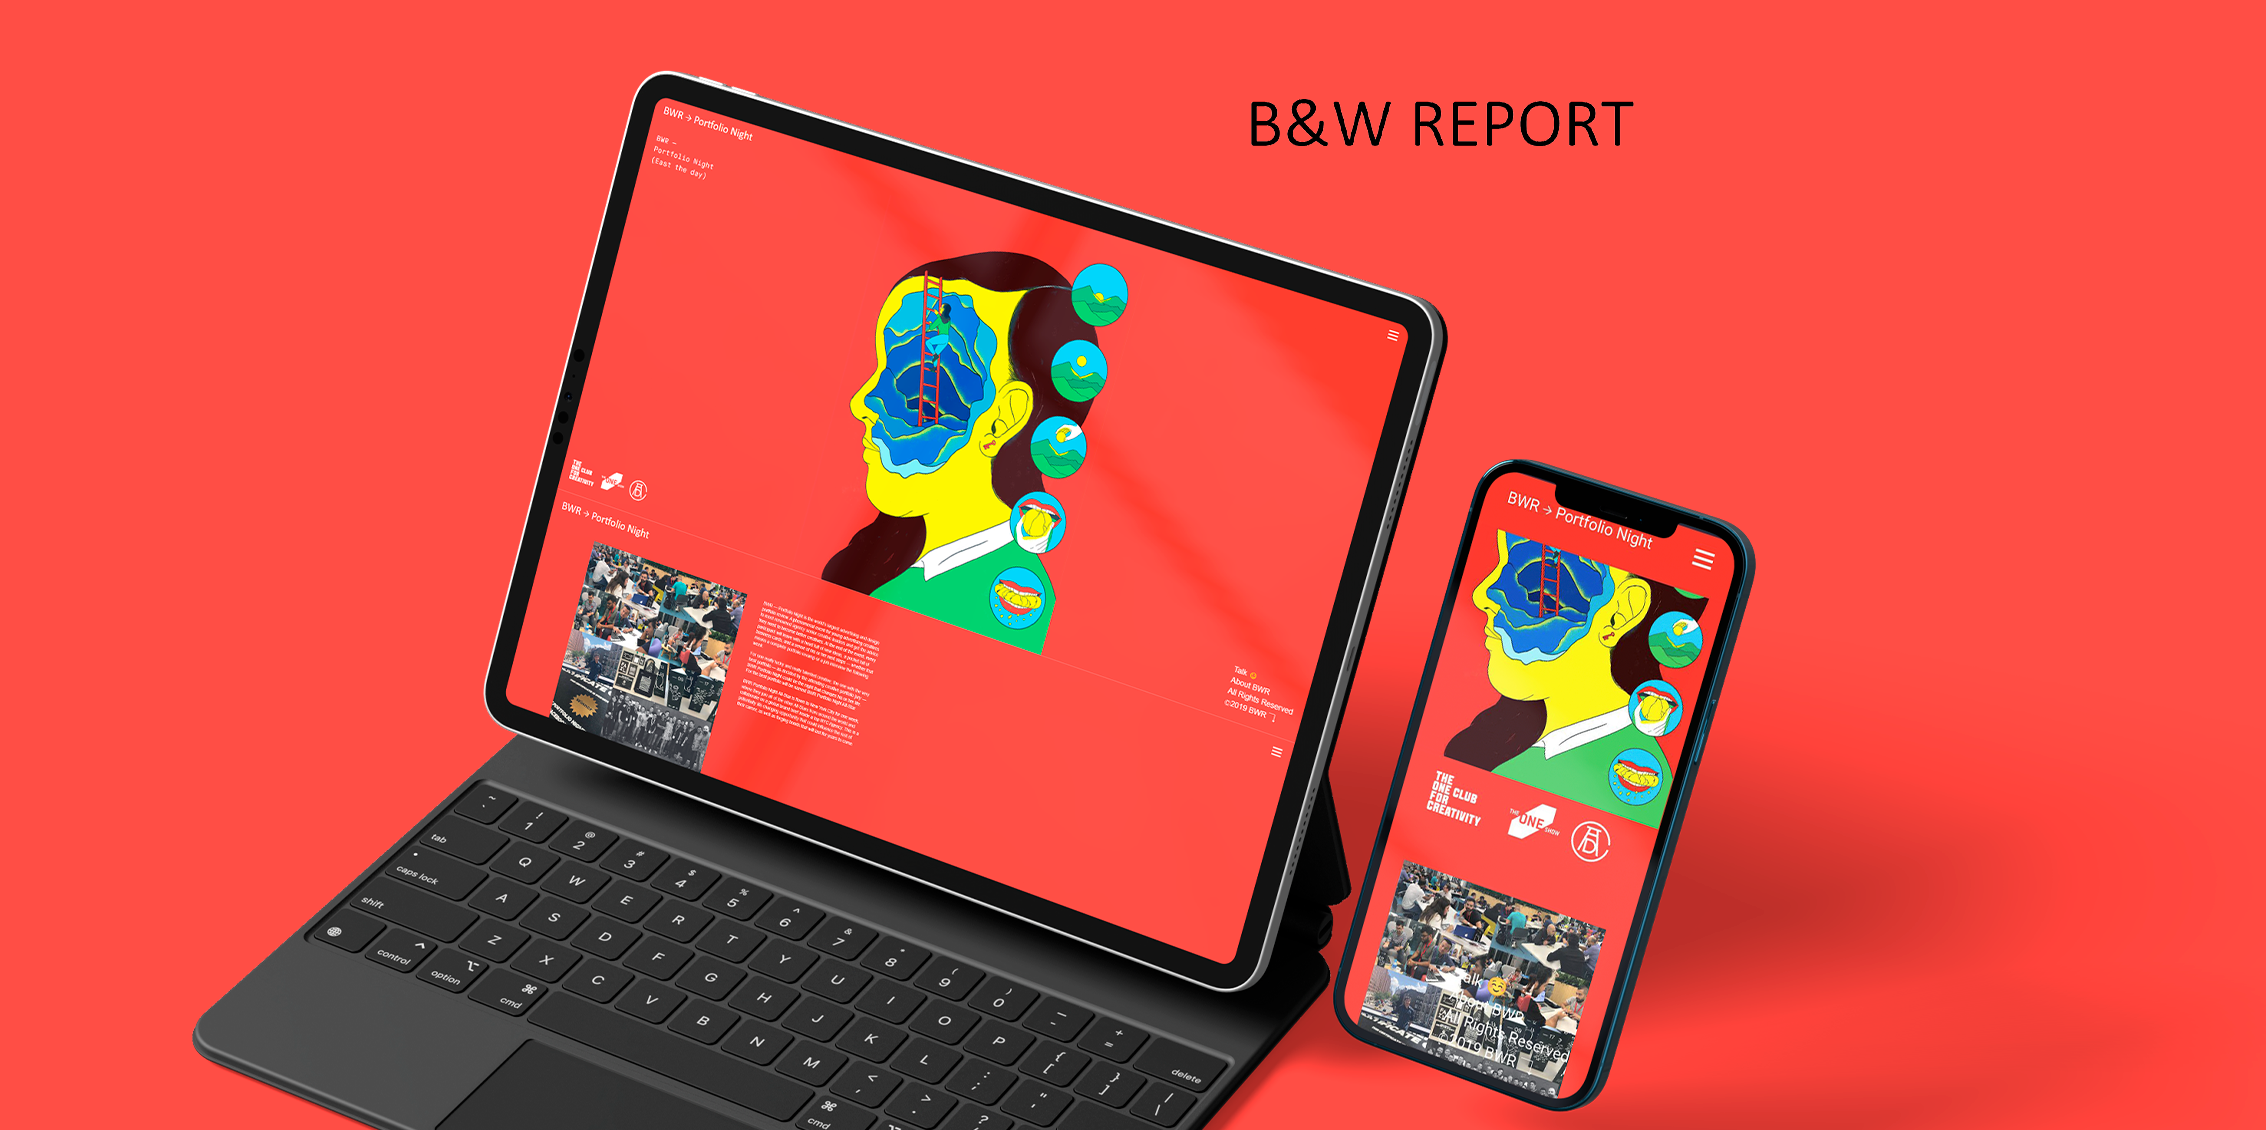 B&W REPORT